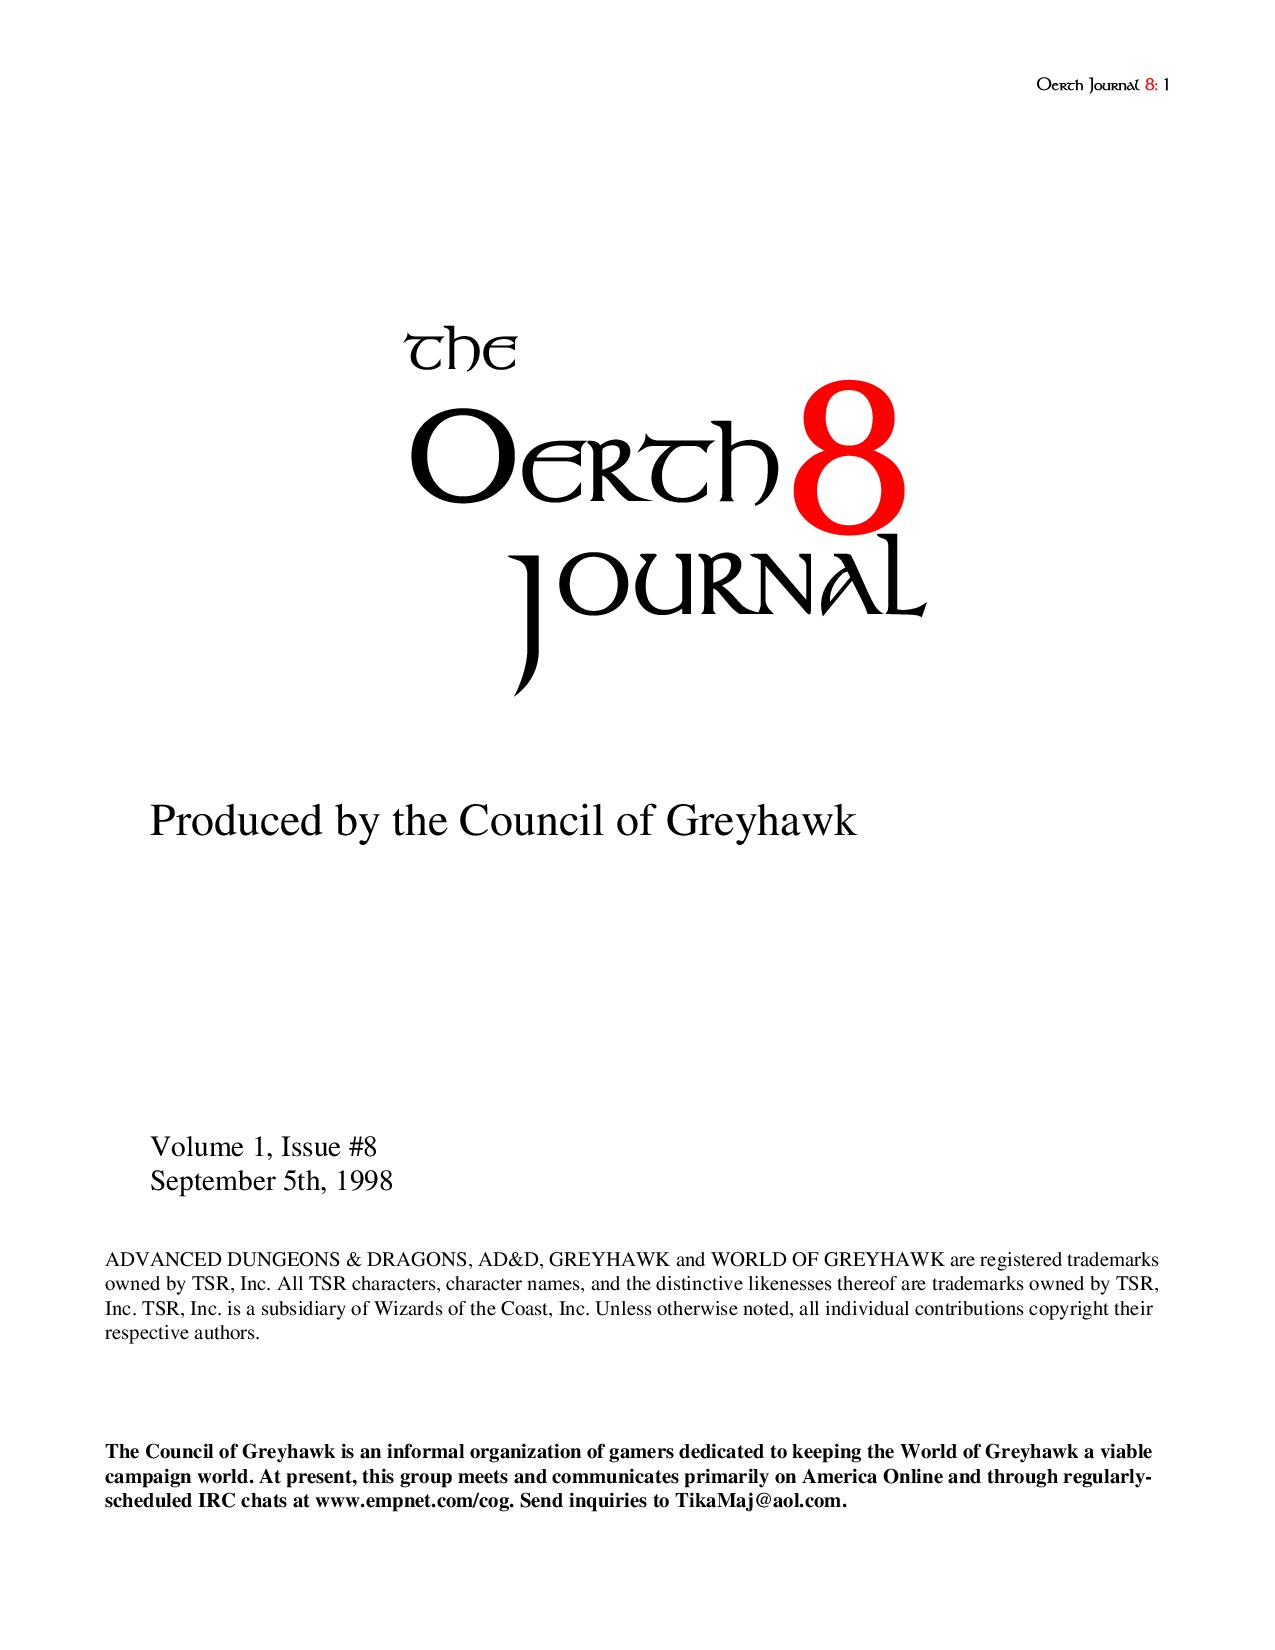 Microsoft Word - OJ8.doc